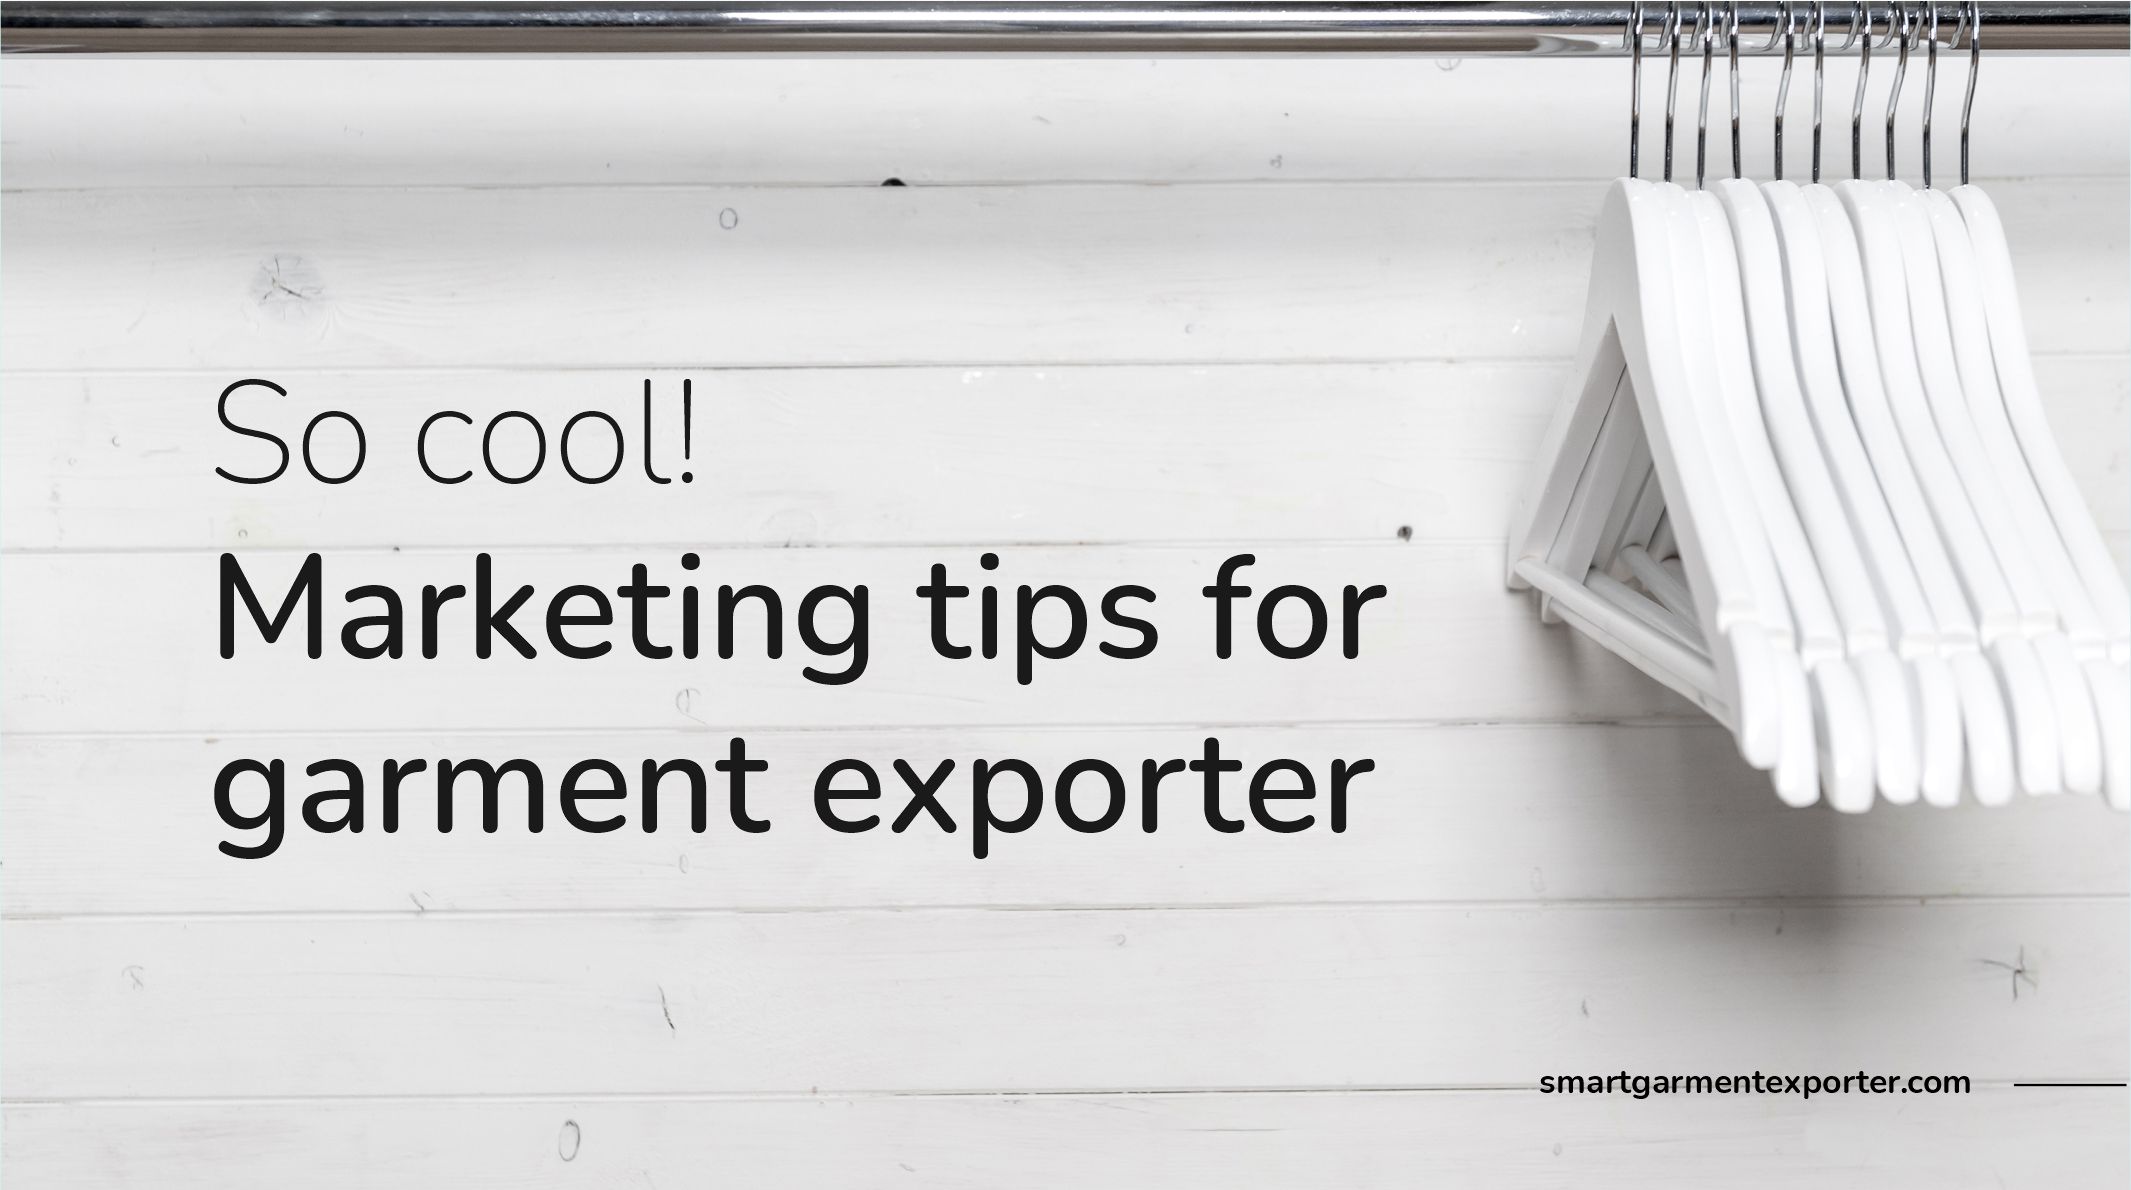 So cool! Marketing tips for garment exporter